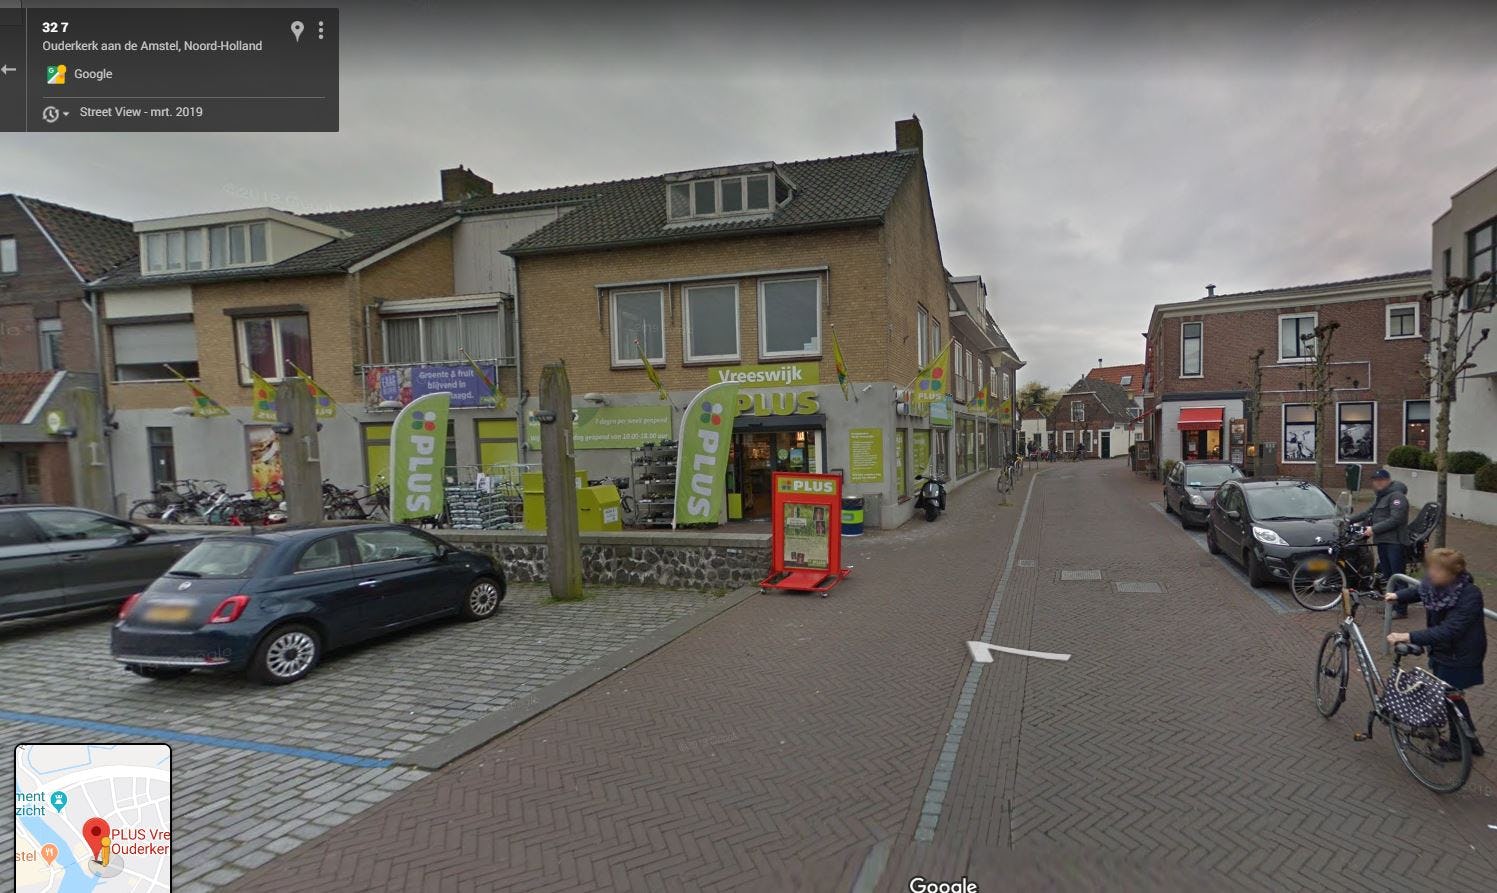 Plus Vreeswijk in Ouderkerk aan de Amstel. Foto: Google Streetview